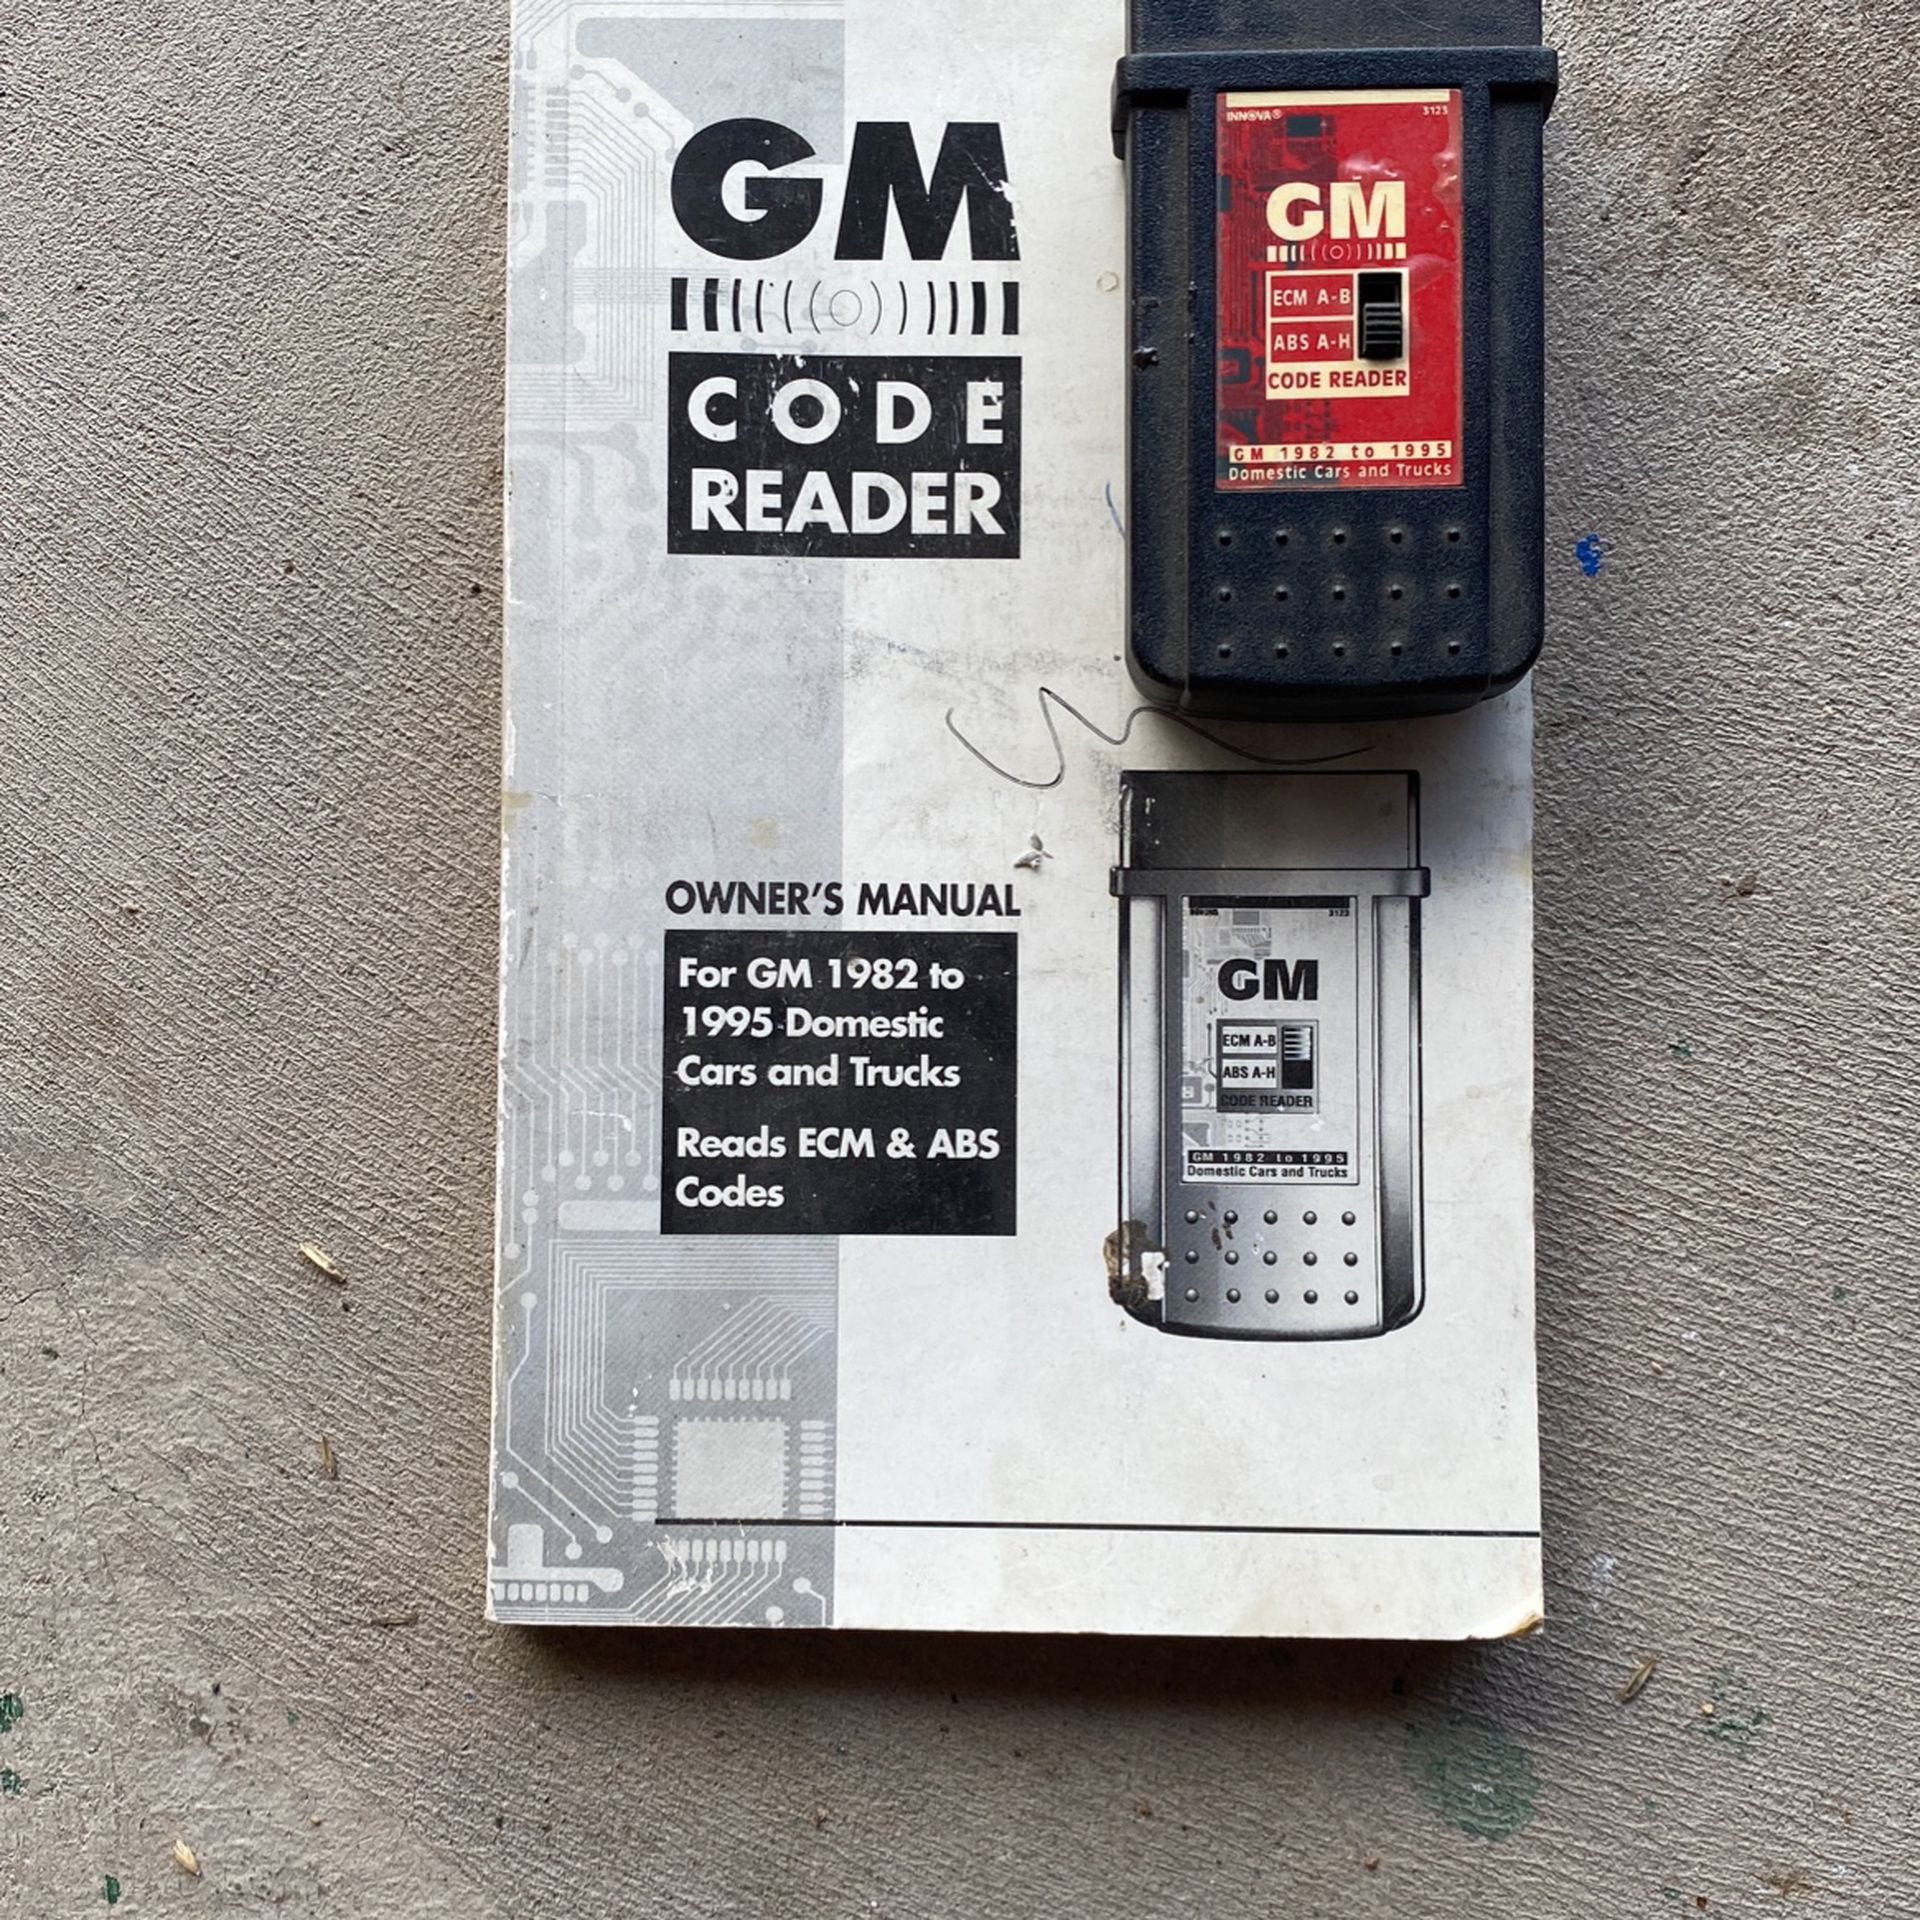 GM Code Reader